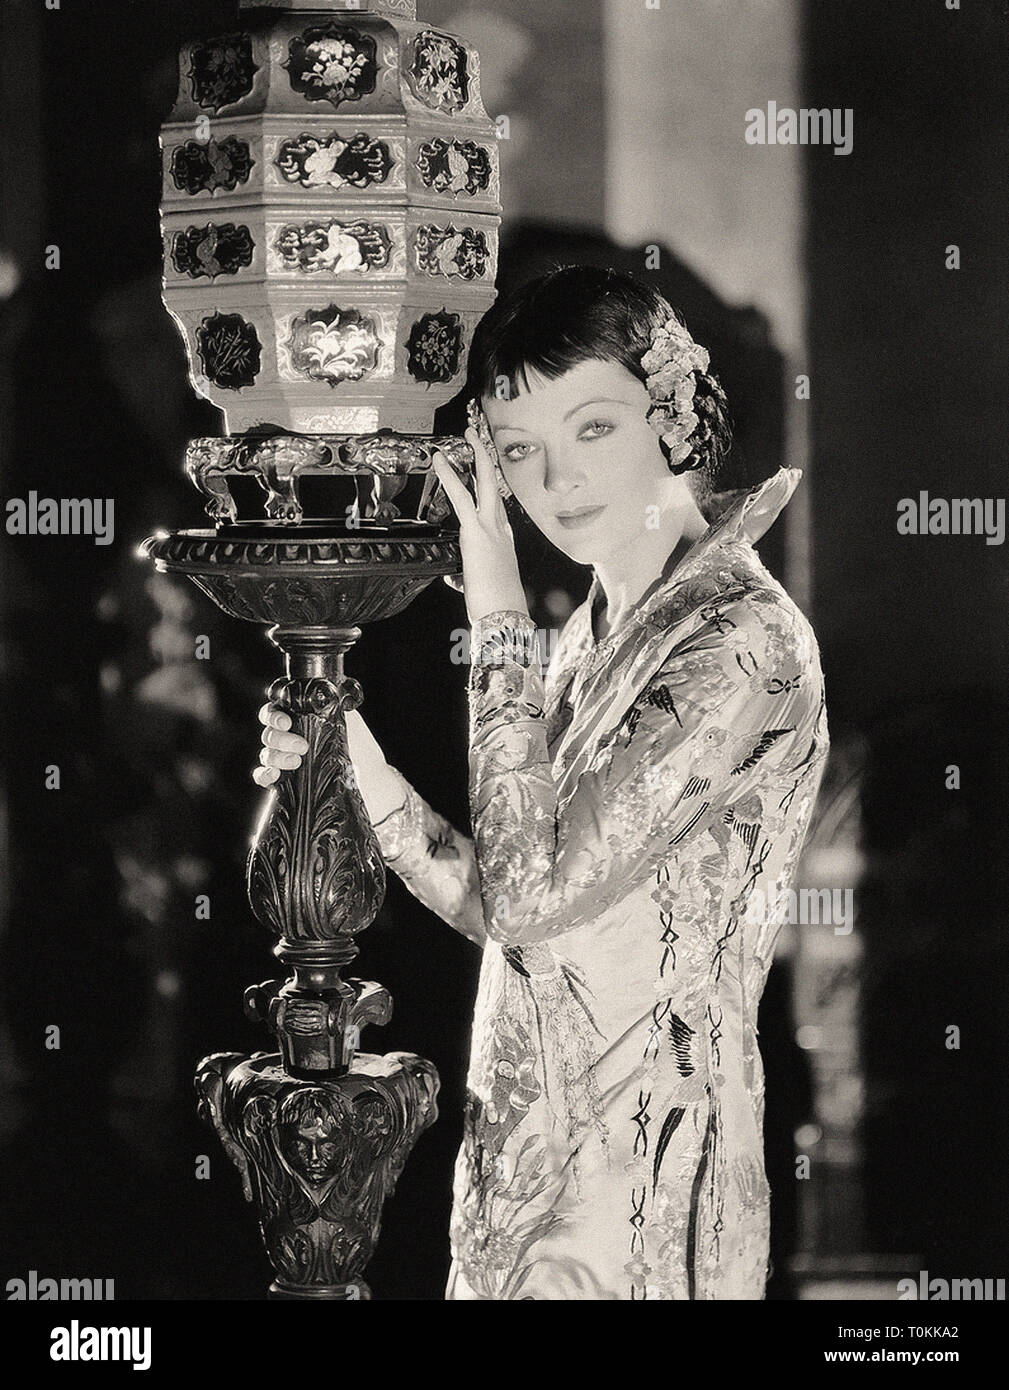 1932 Celebrity Photo Print Actress Myrna Loy in "The Mask of Fu Manchu" 